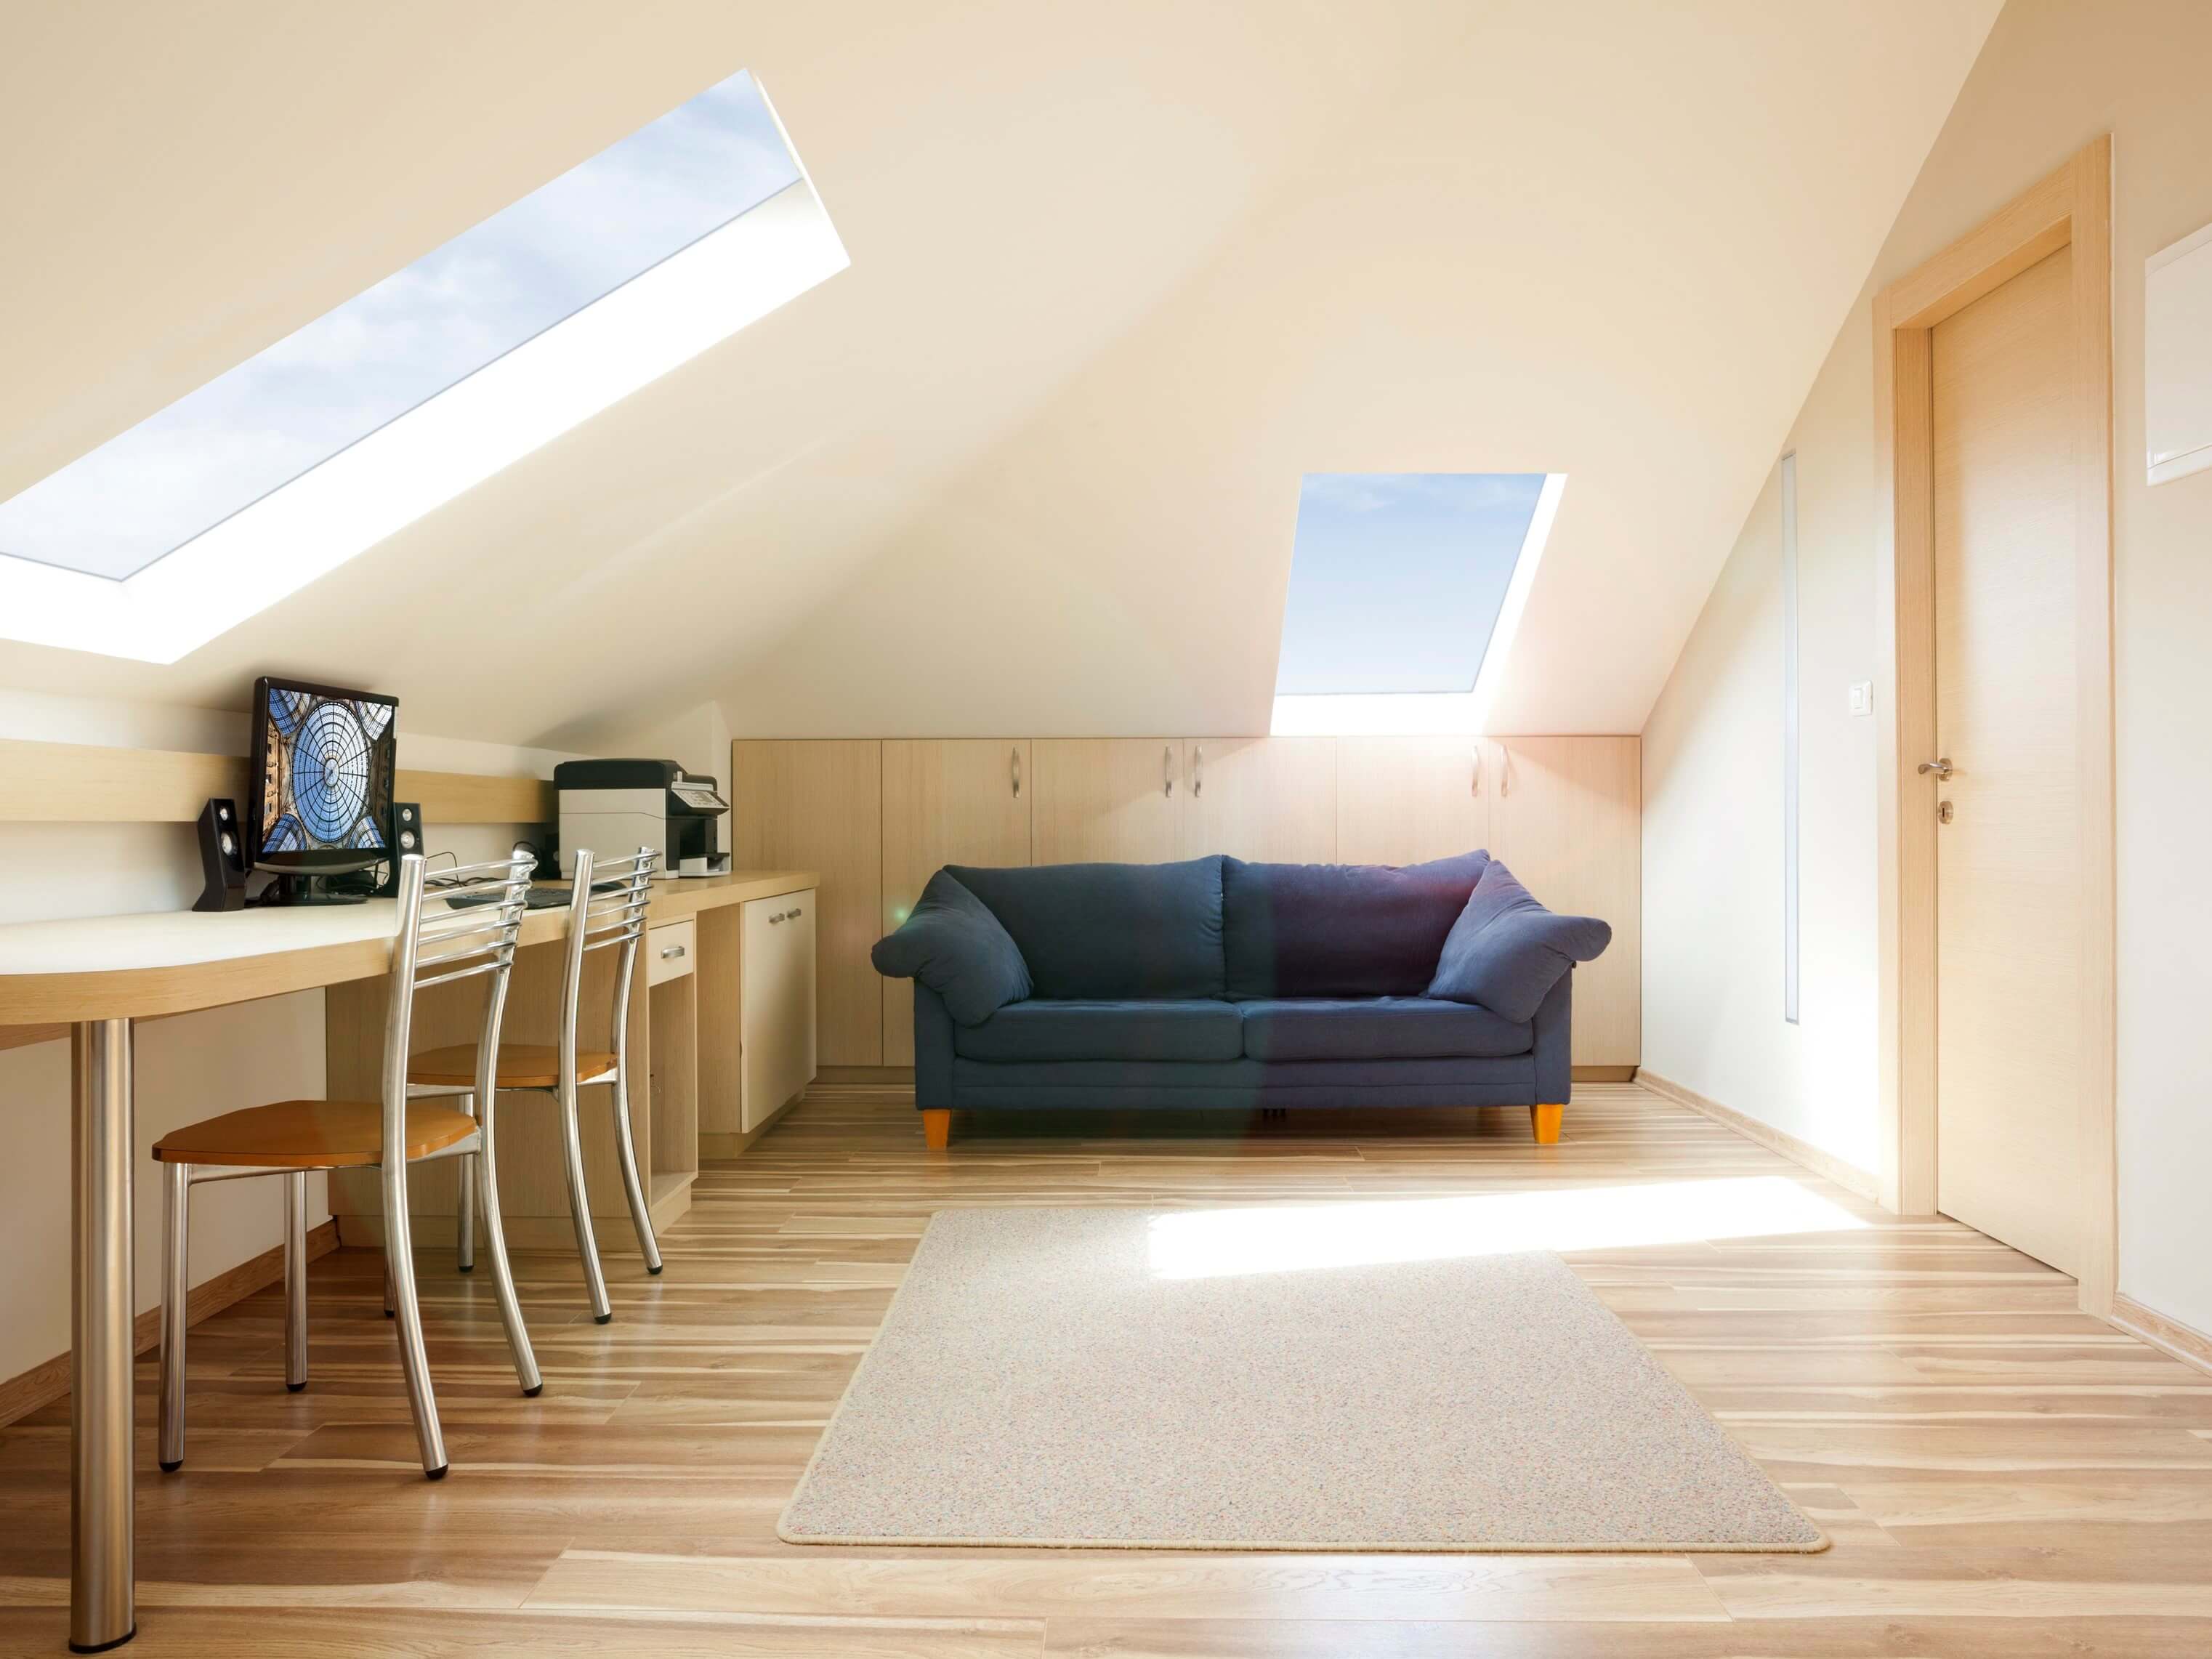 Modern loft conversion with Luxlite windows